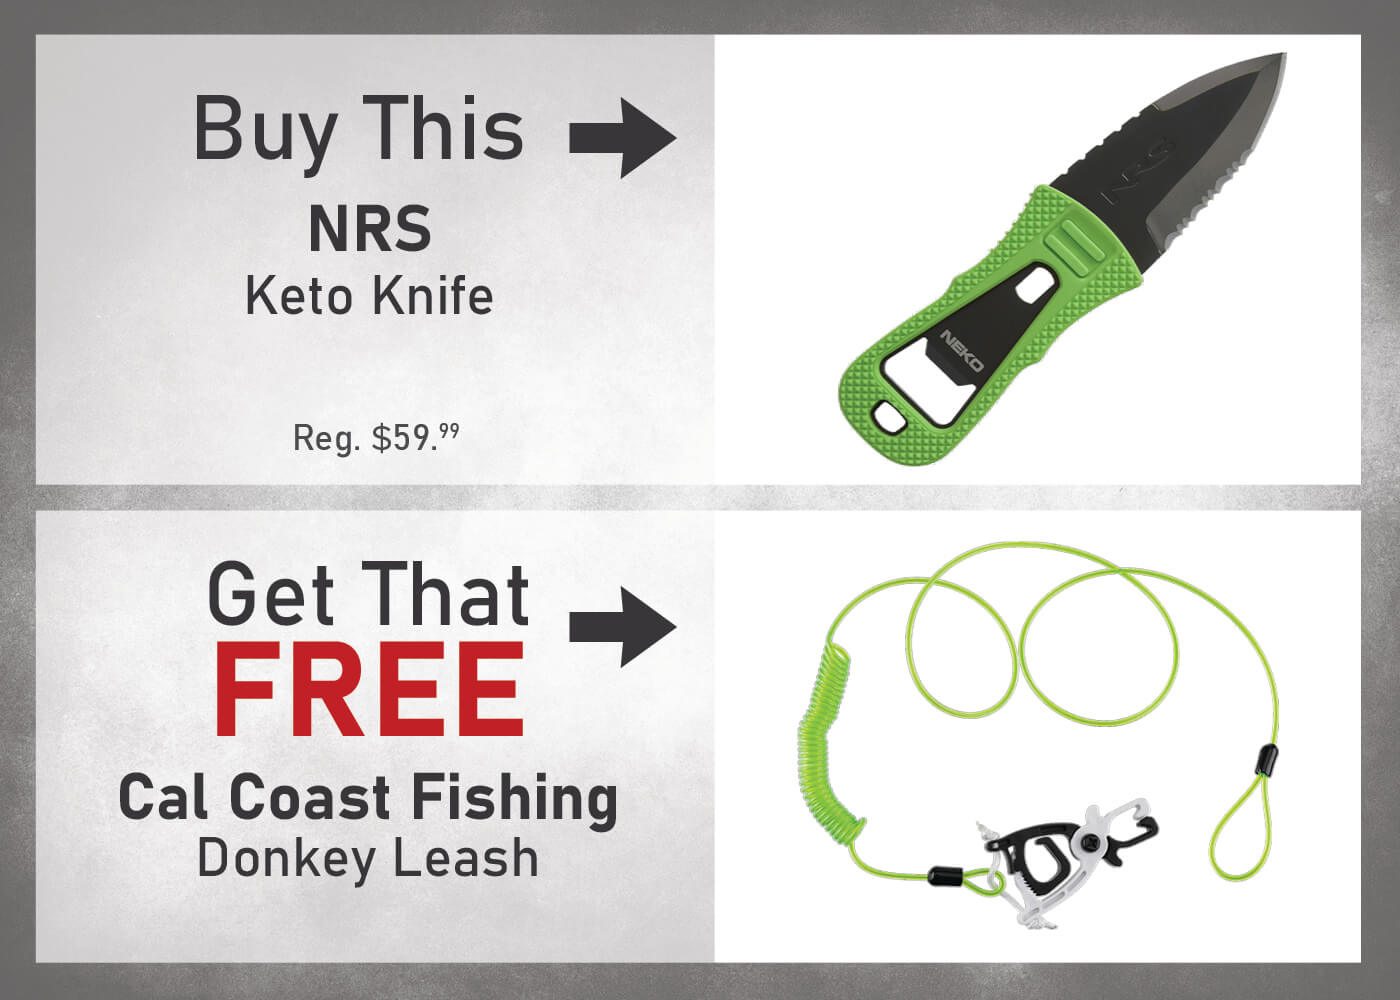 Buy an NRS Keto Knife & Get a FREE Cal Coast Fishing Donkey Leash